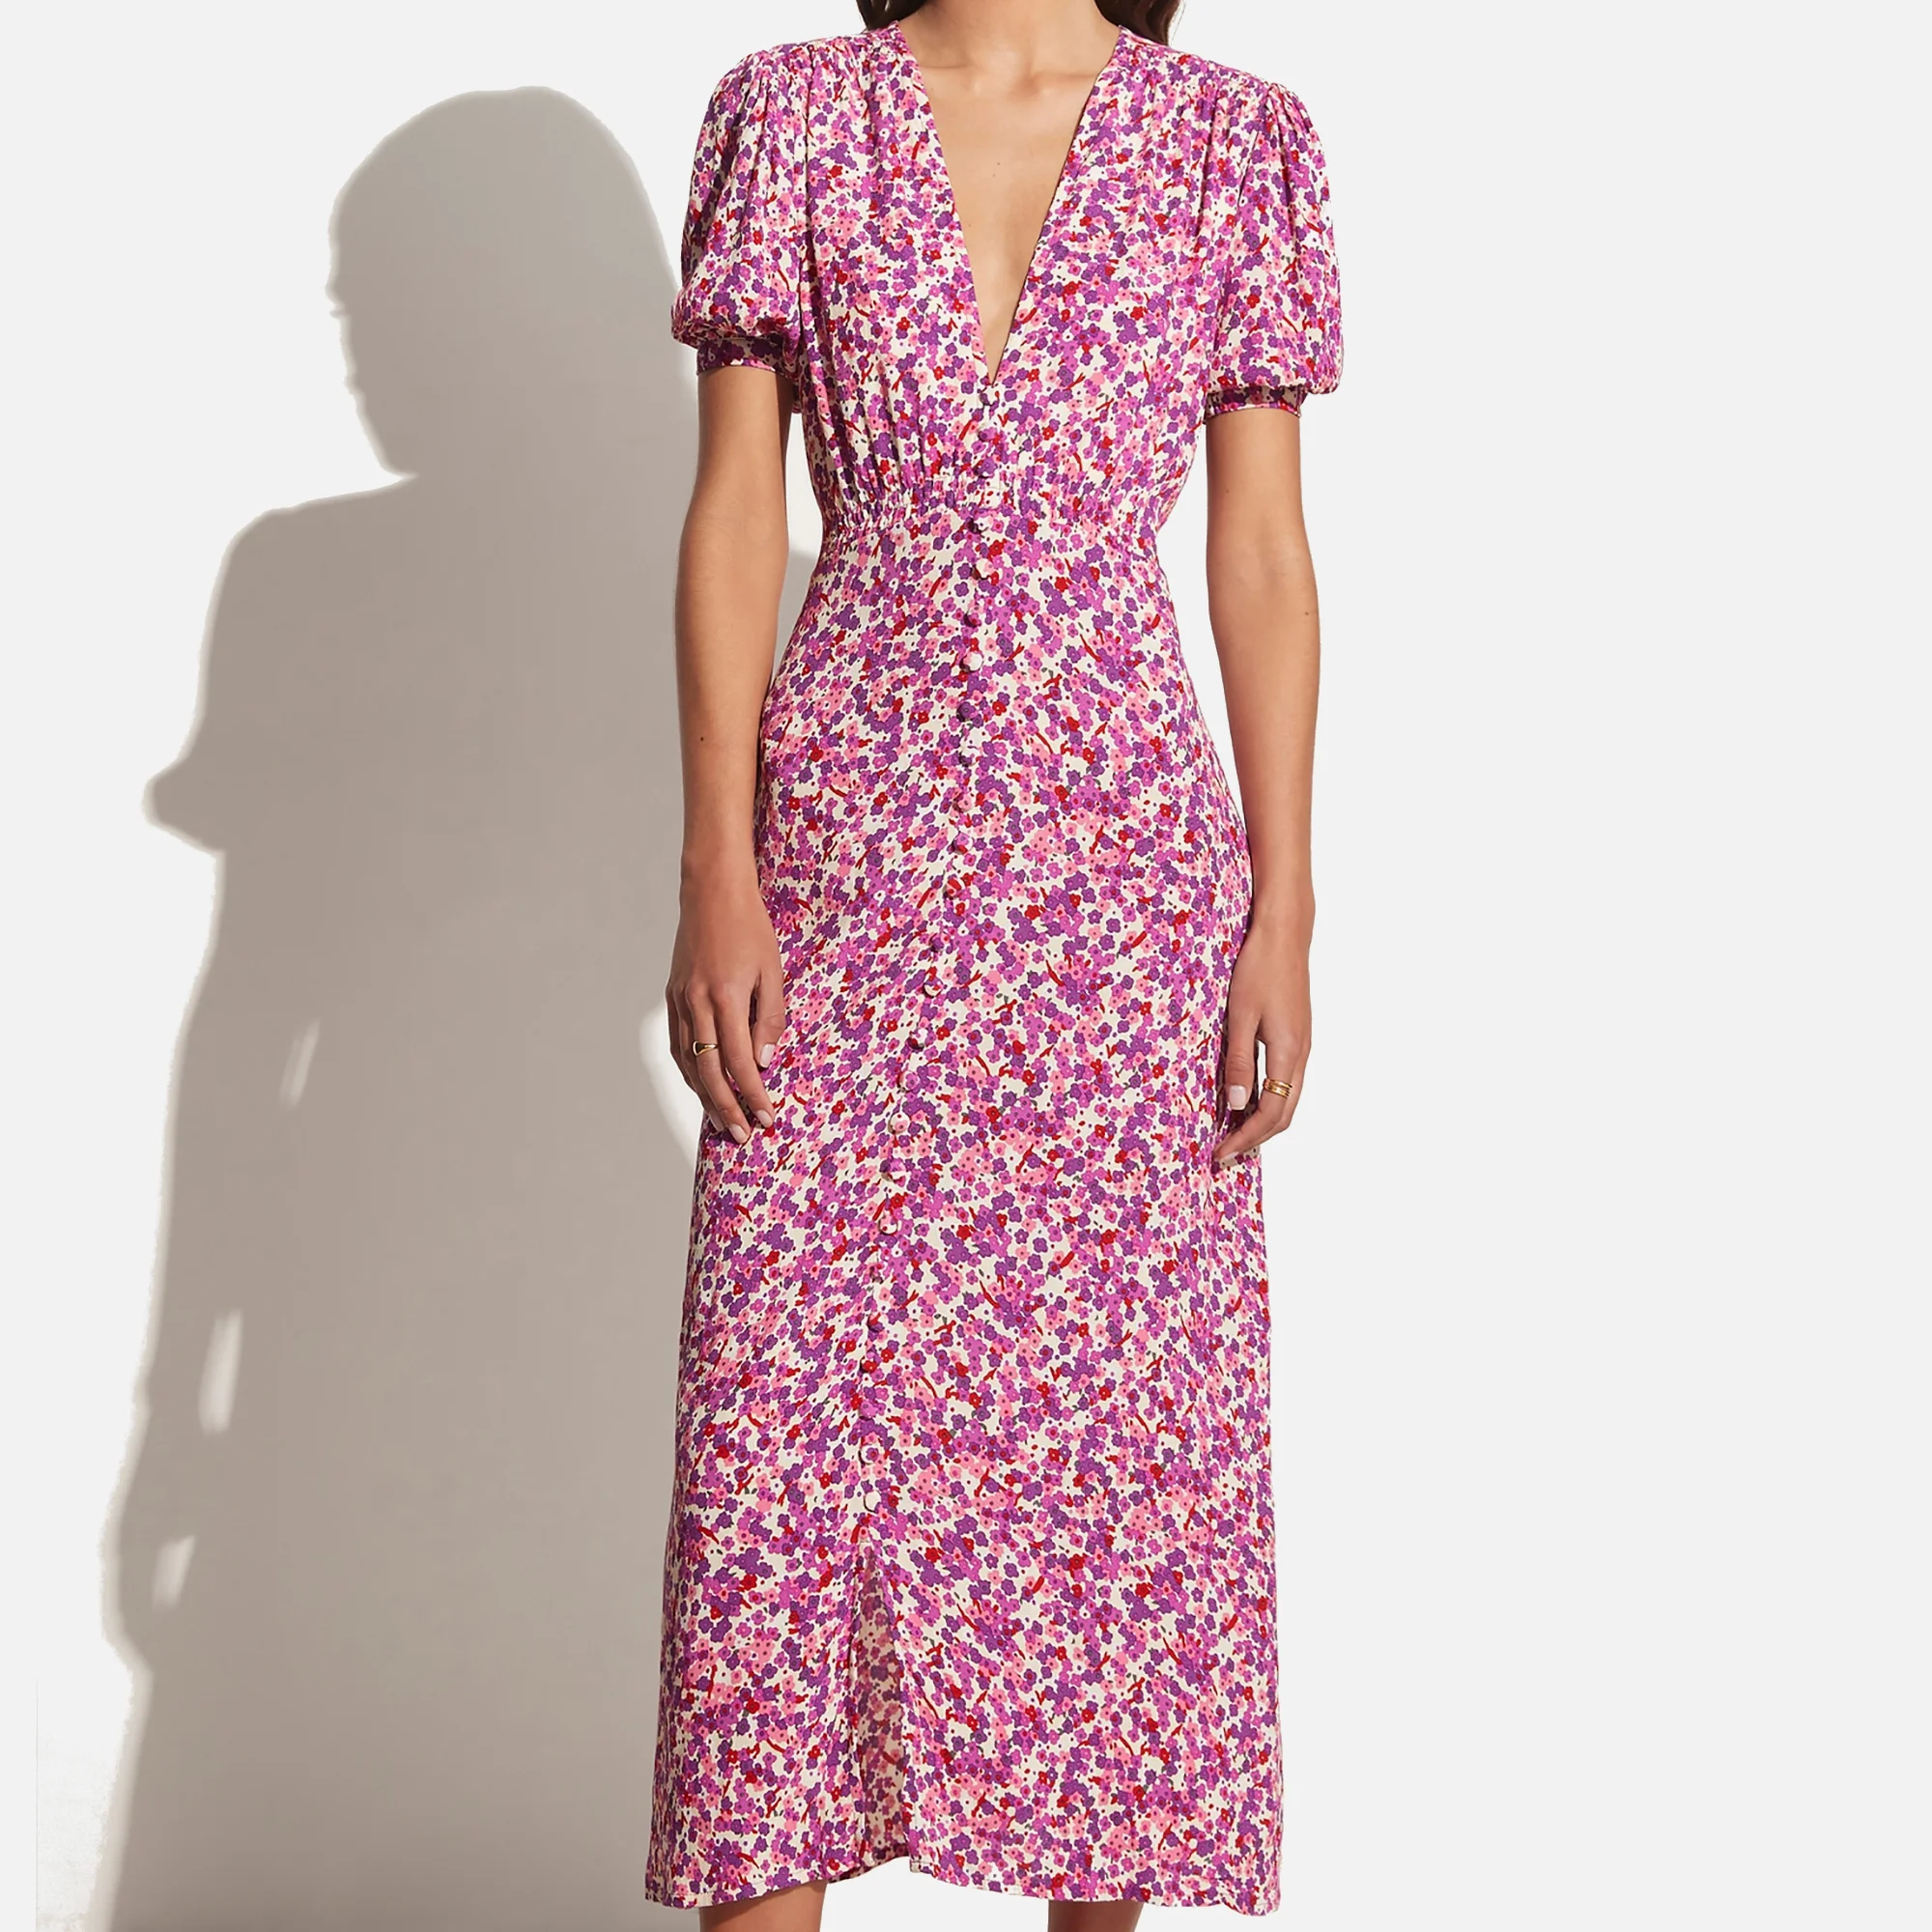 Faithfull The Brand Bellavista Floral-Print Crepe Midi Dress Image 1